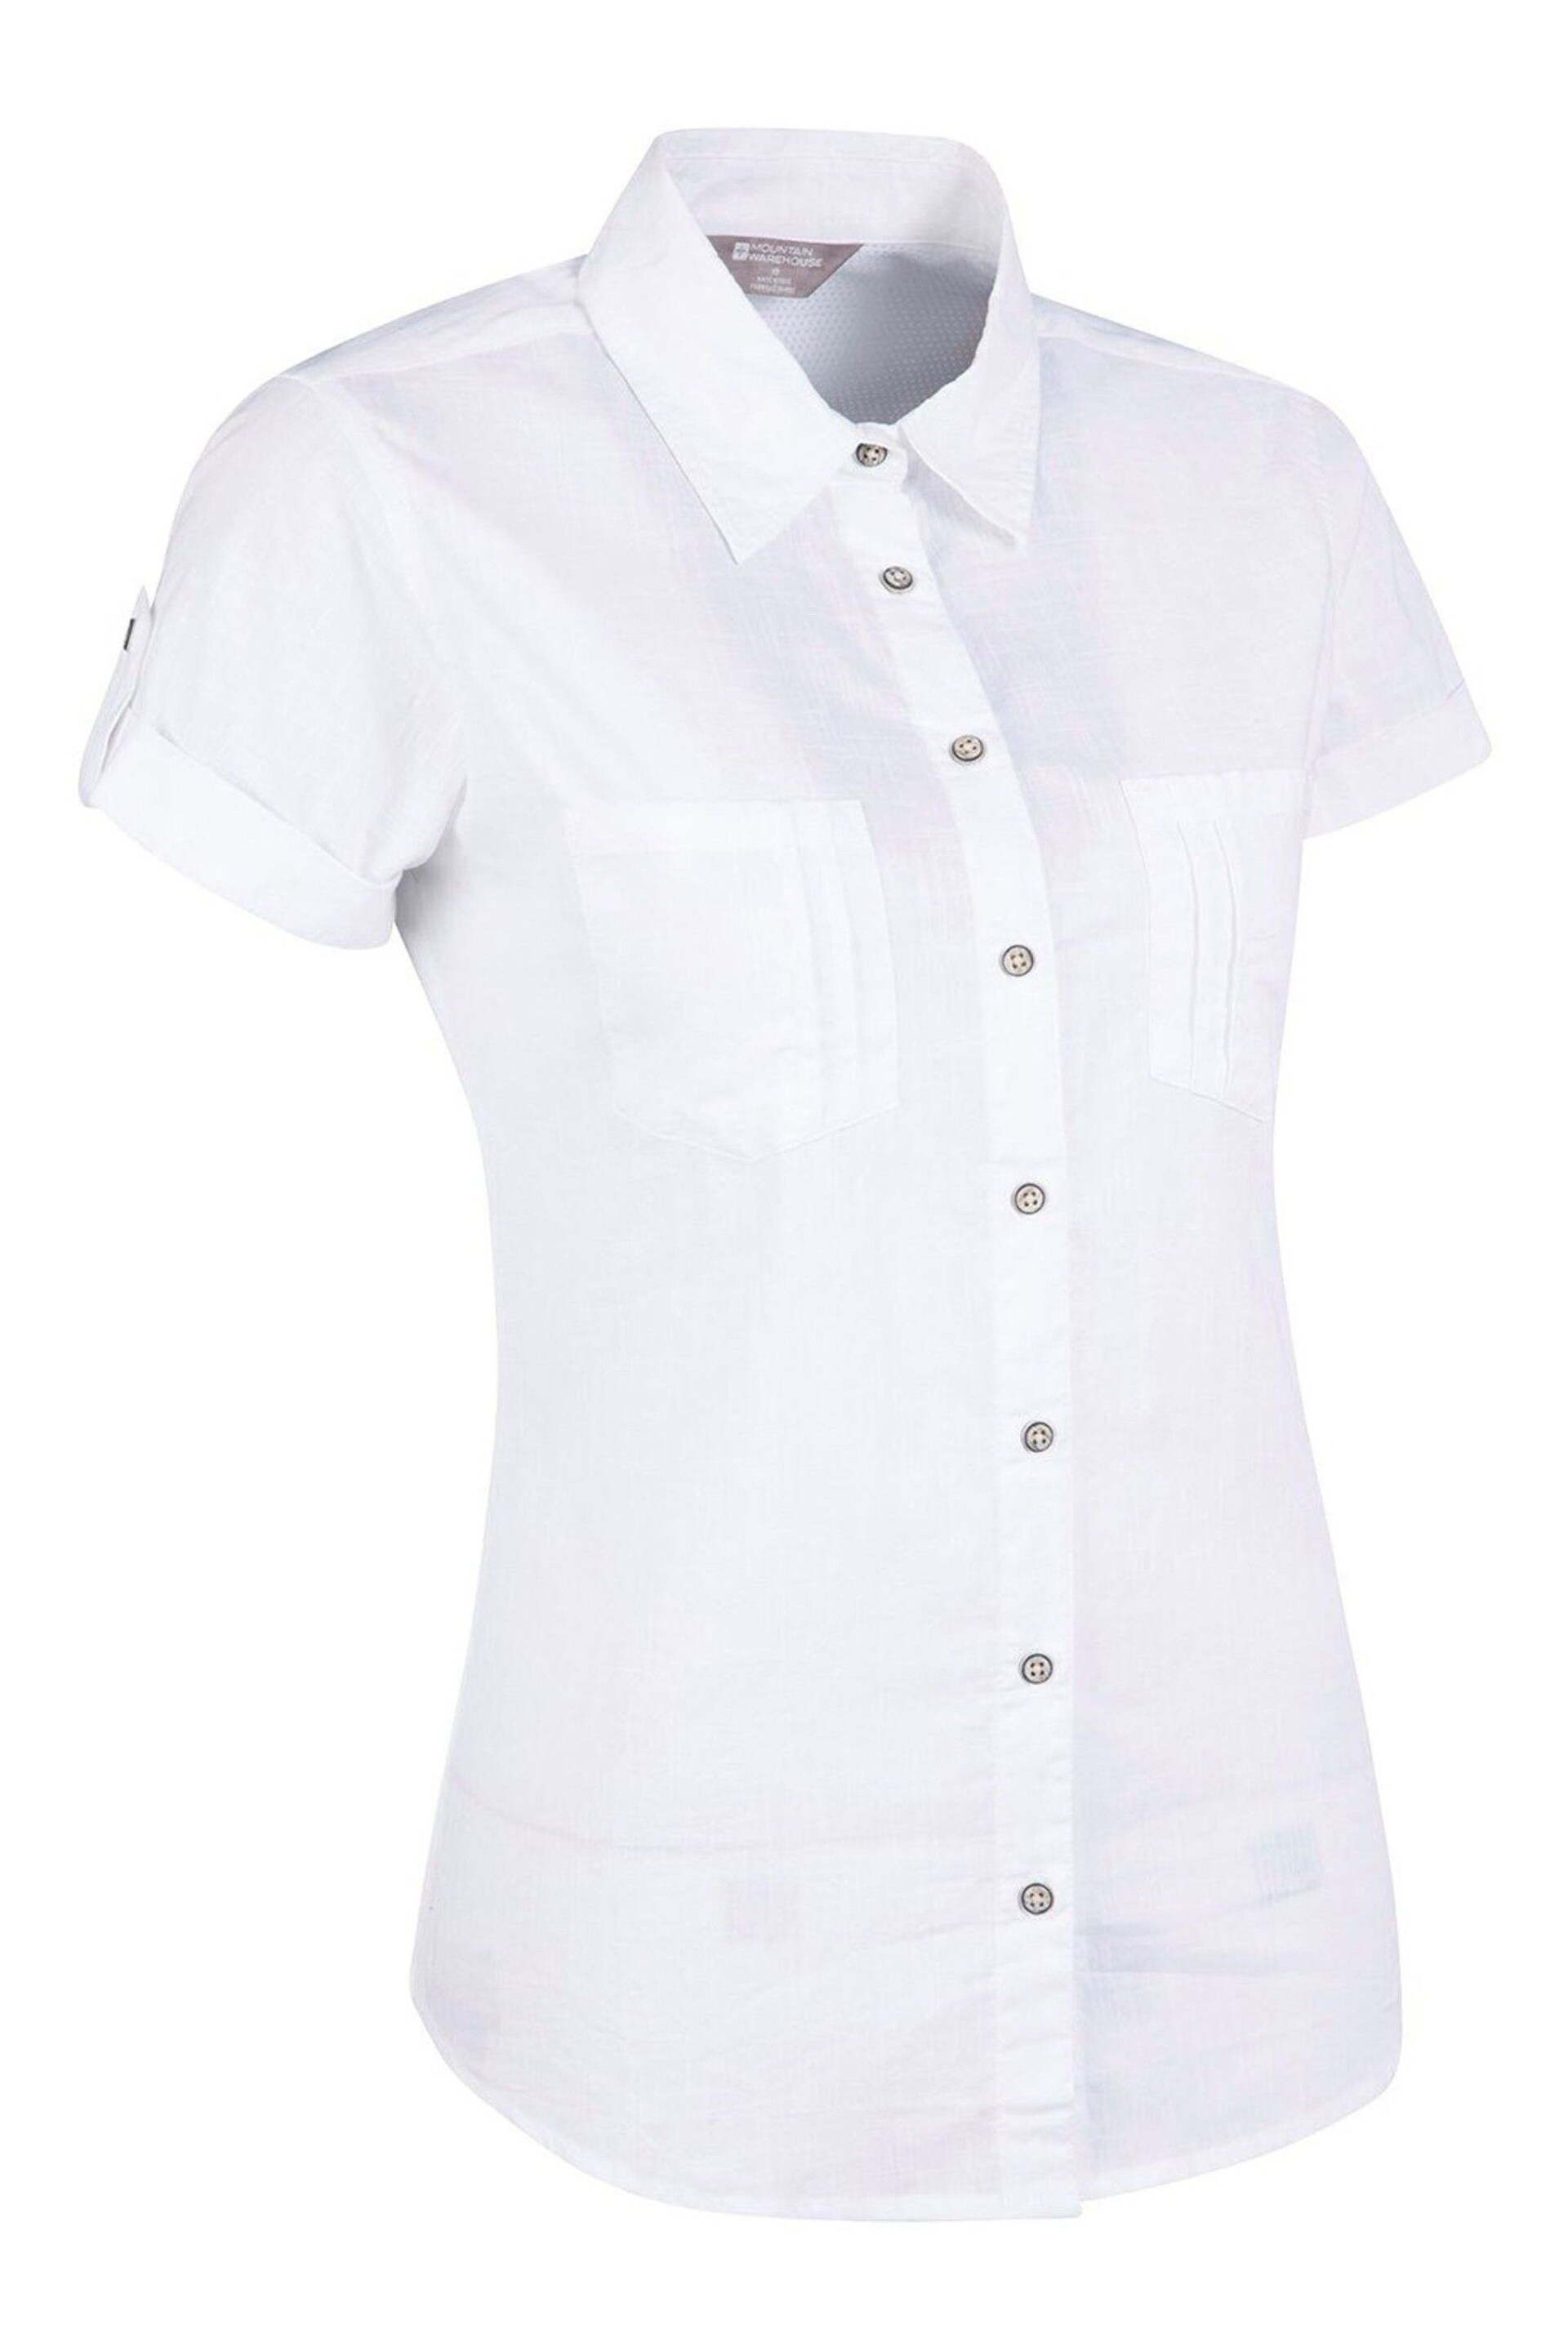 Mountain Warehouse White Coconut Short Sleeve Womens Shirt - Image 3 of 5